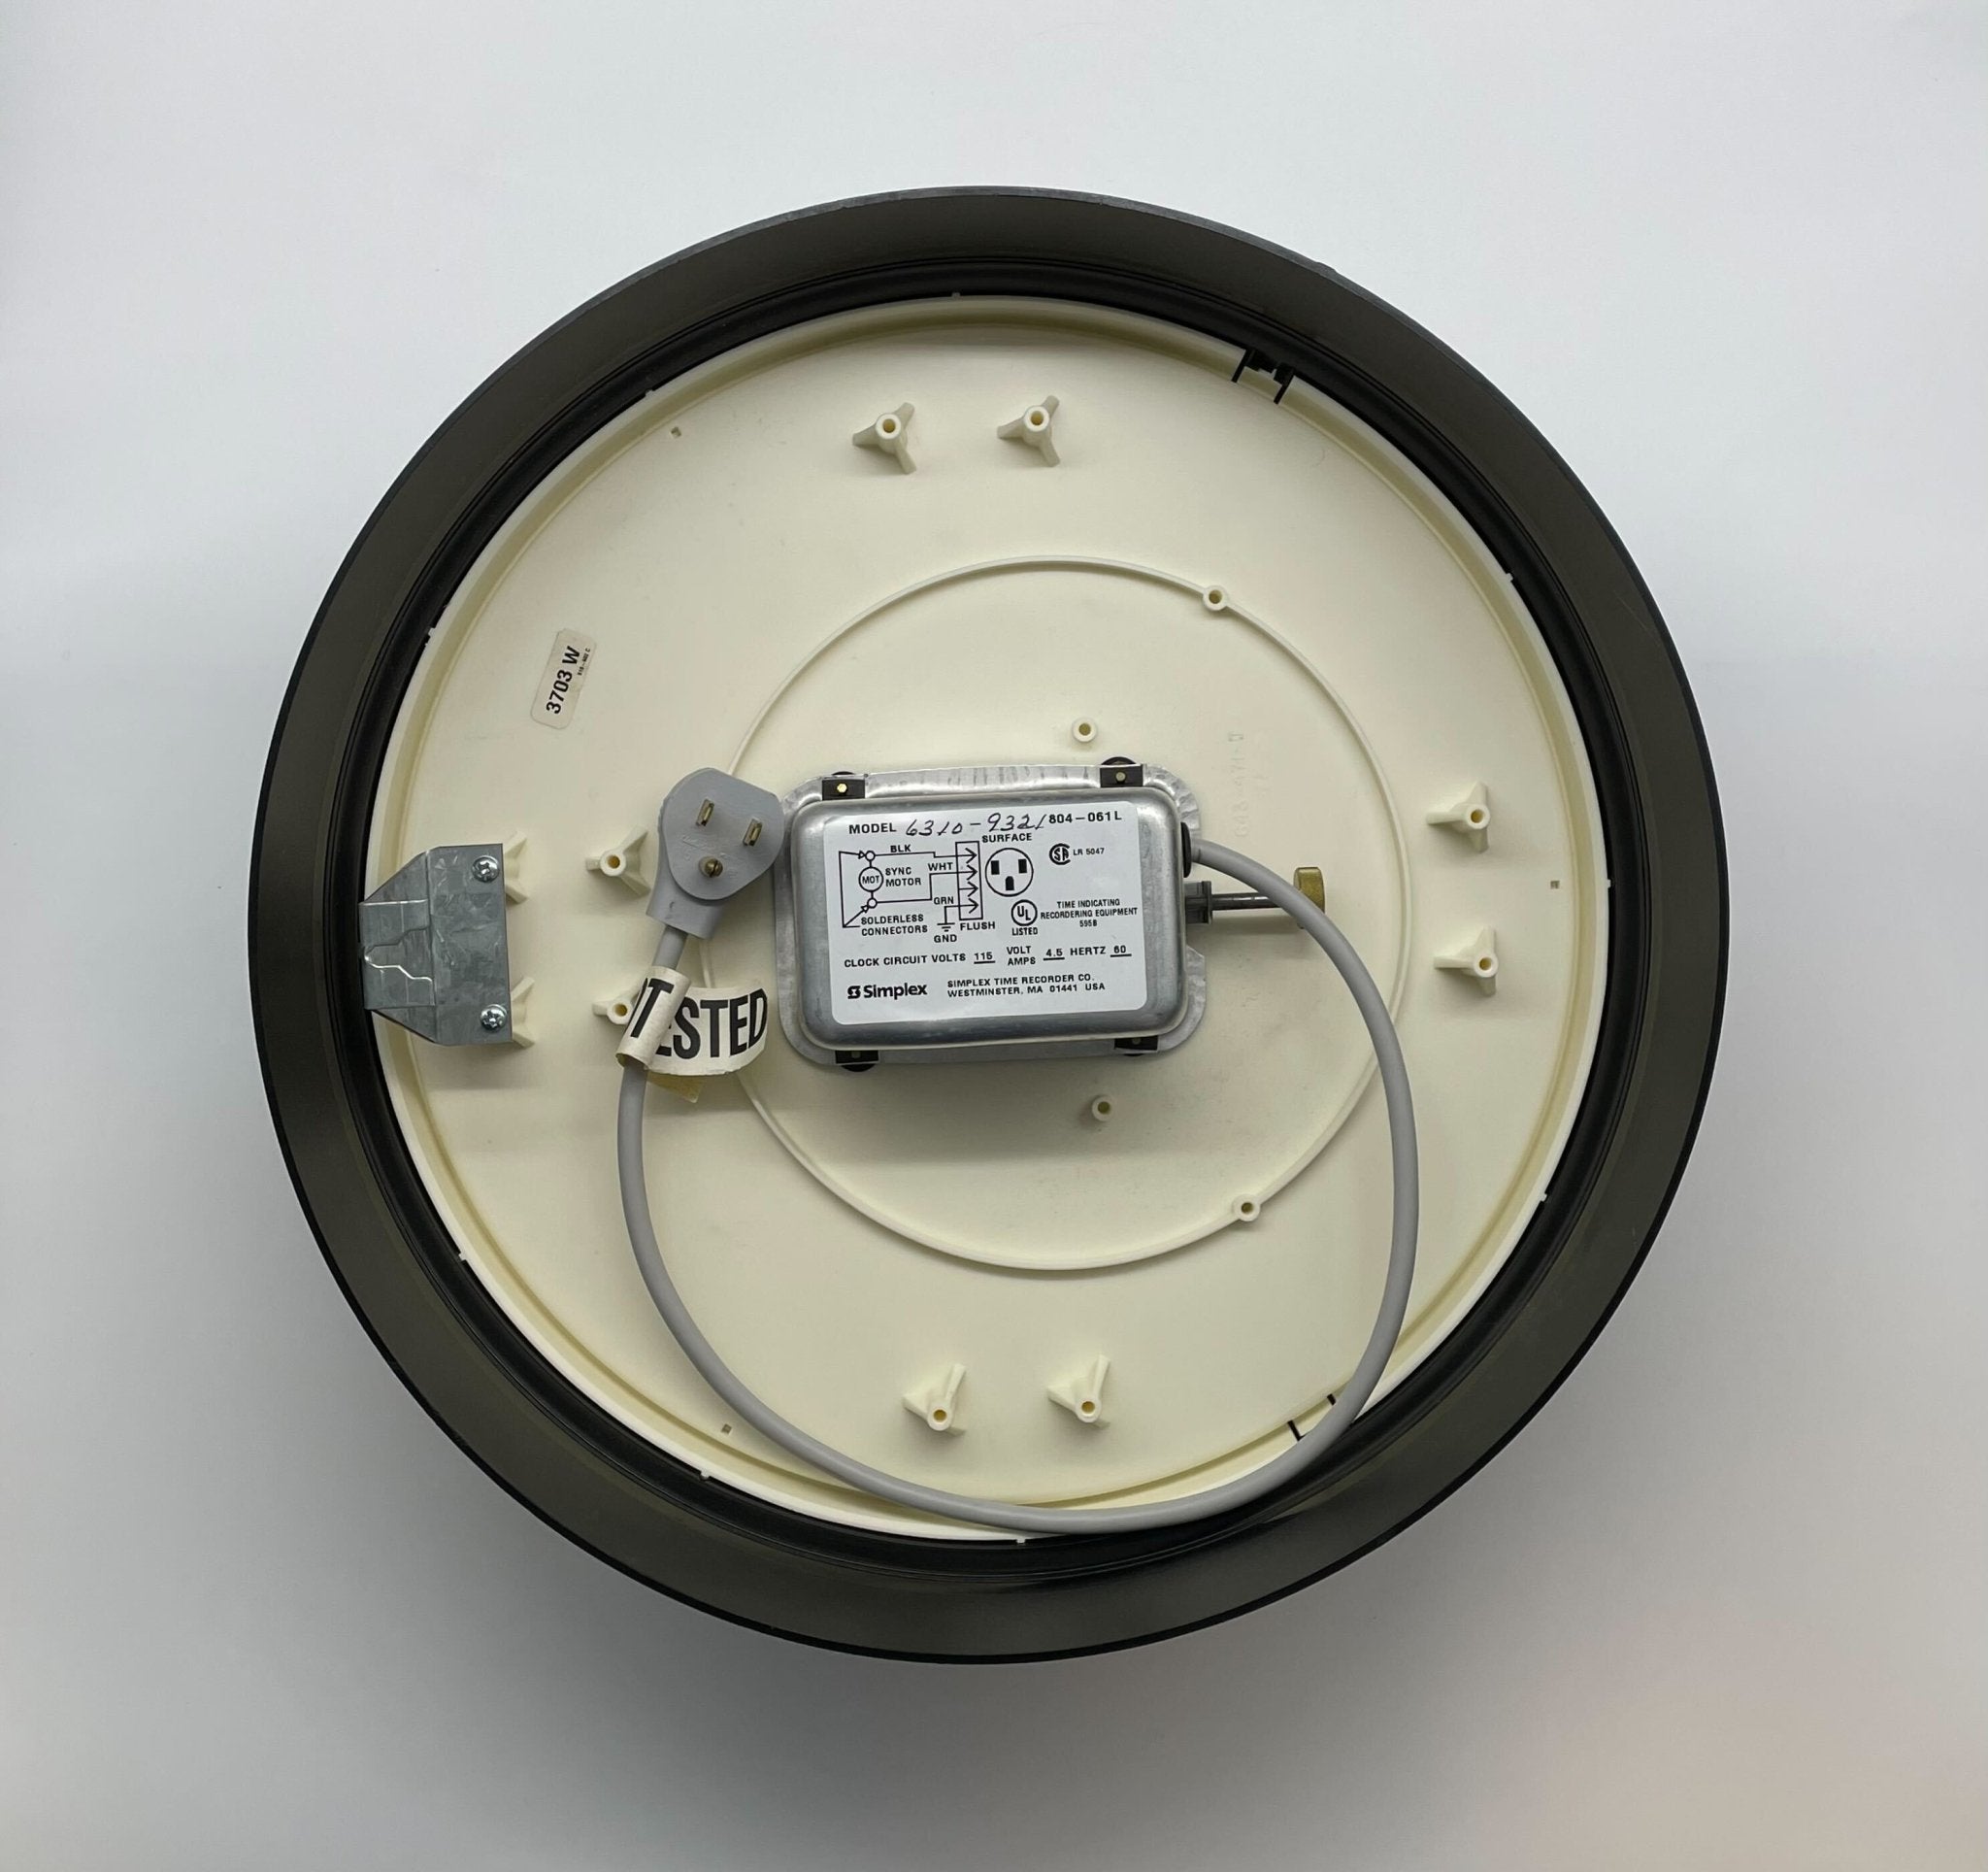 Simplex 6310-9321 Electric Synchronous Clock - The Fire Alarm Supplier